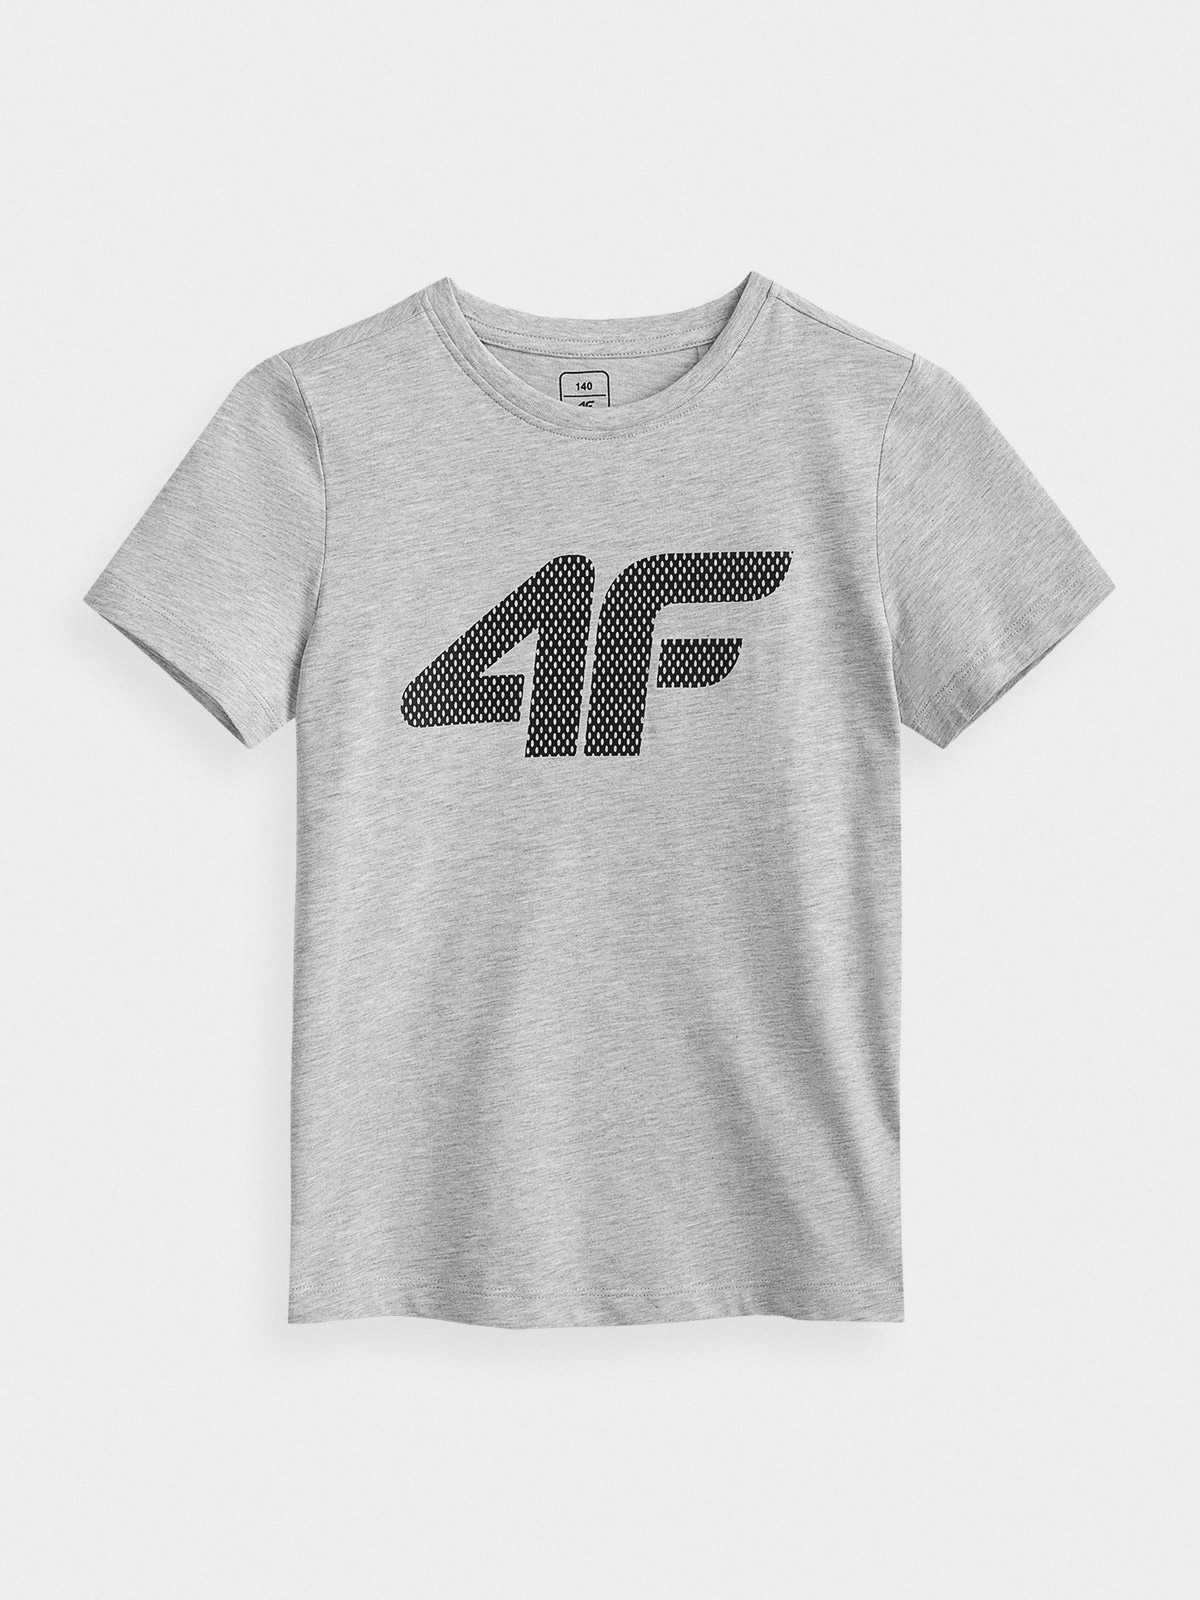 фото Футболка 4f boy's t-shirts hjz21-jtsm001-27m цв.серый р. 146